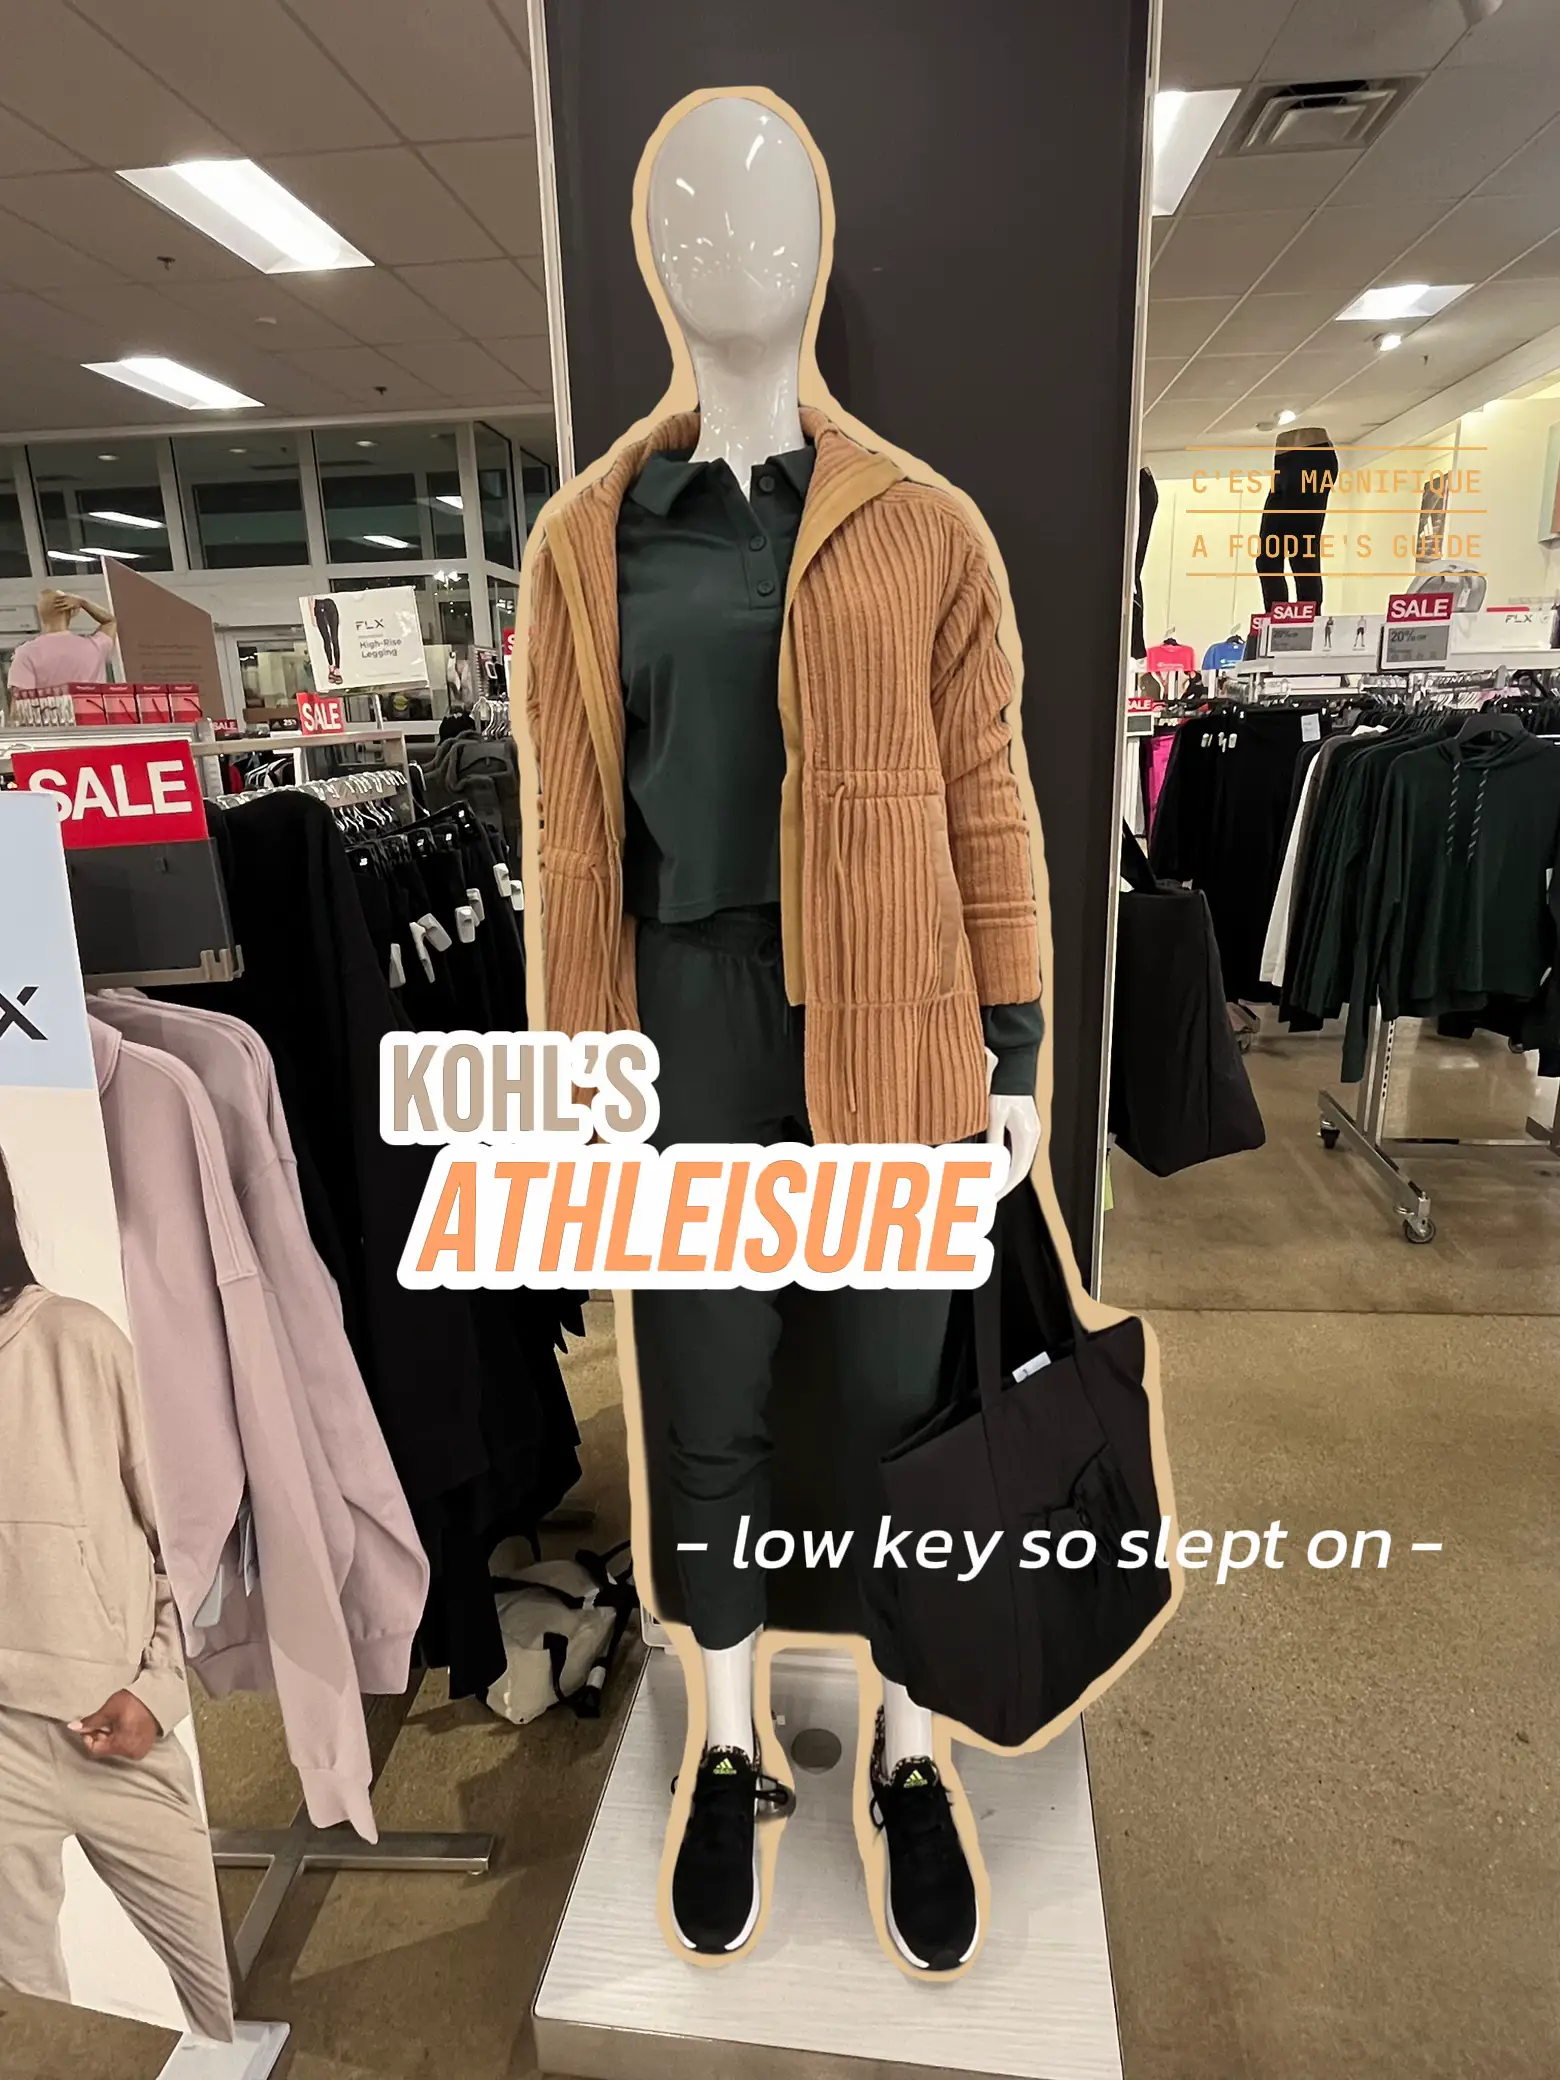 fashion merchandising for Kohl's clothing - Lemon8 Search